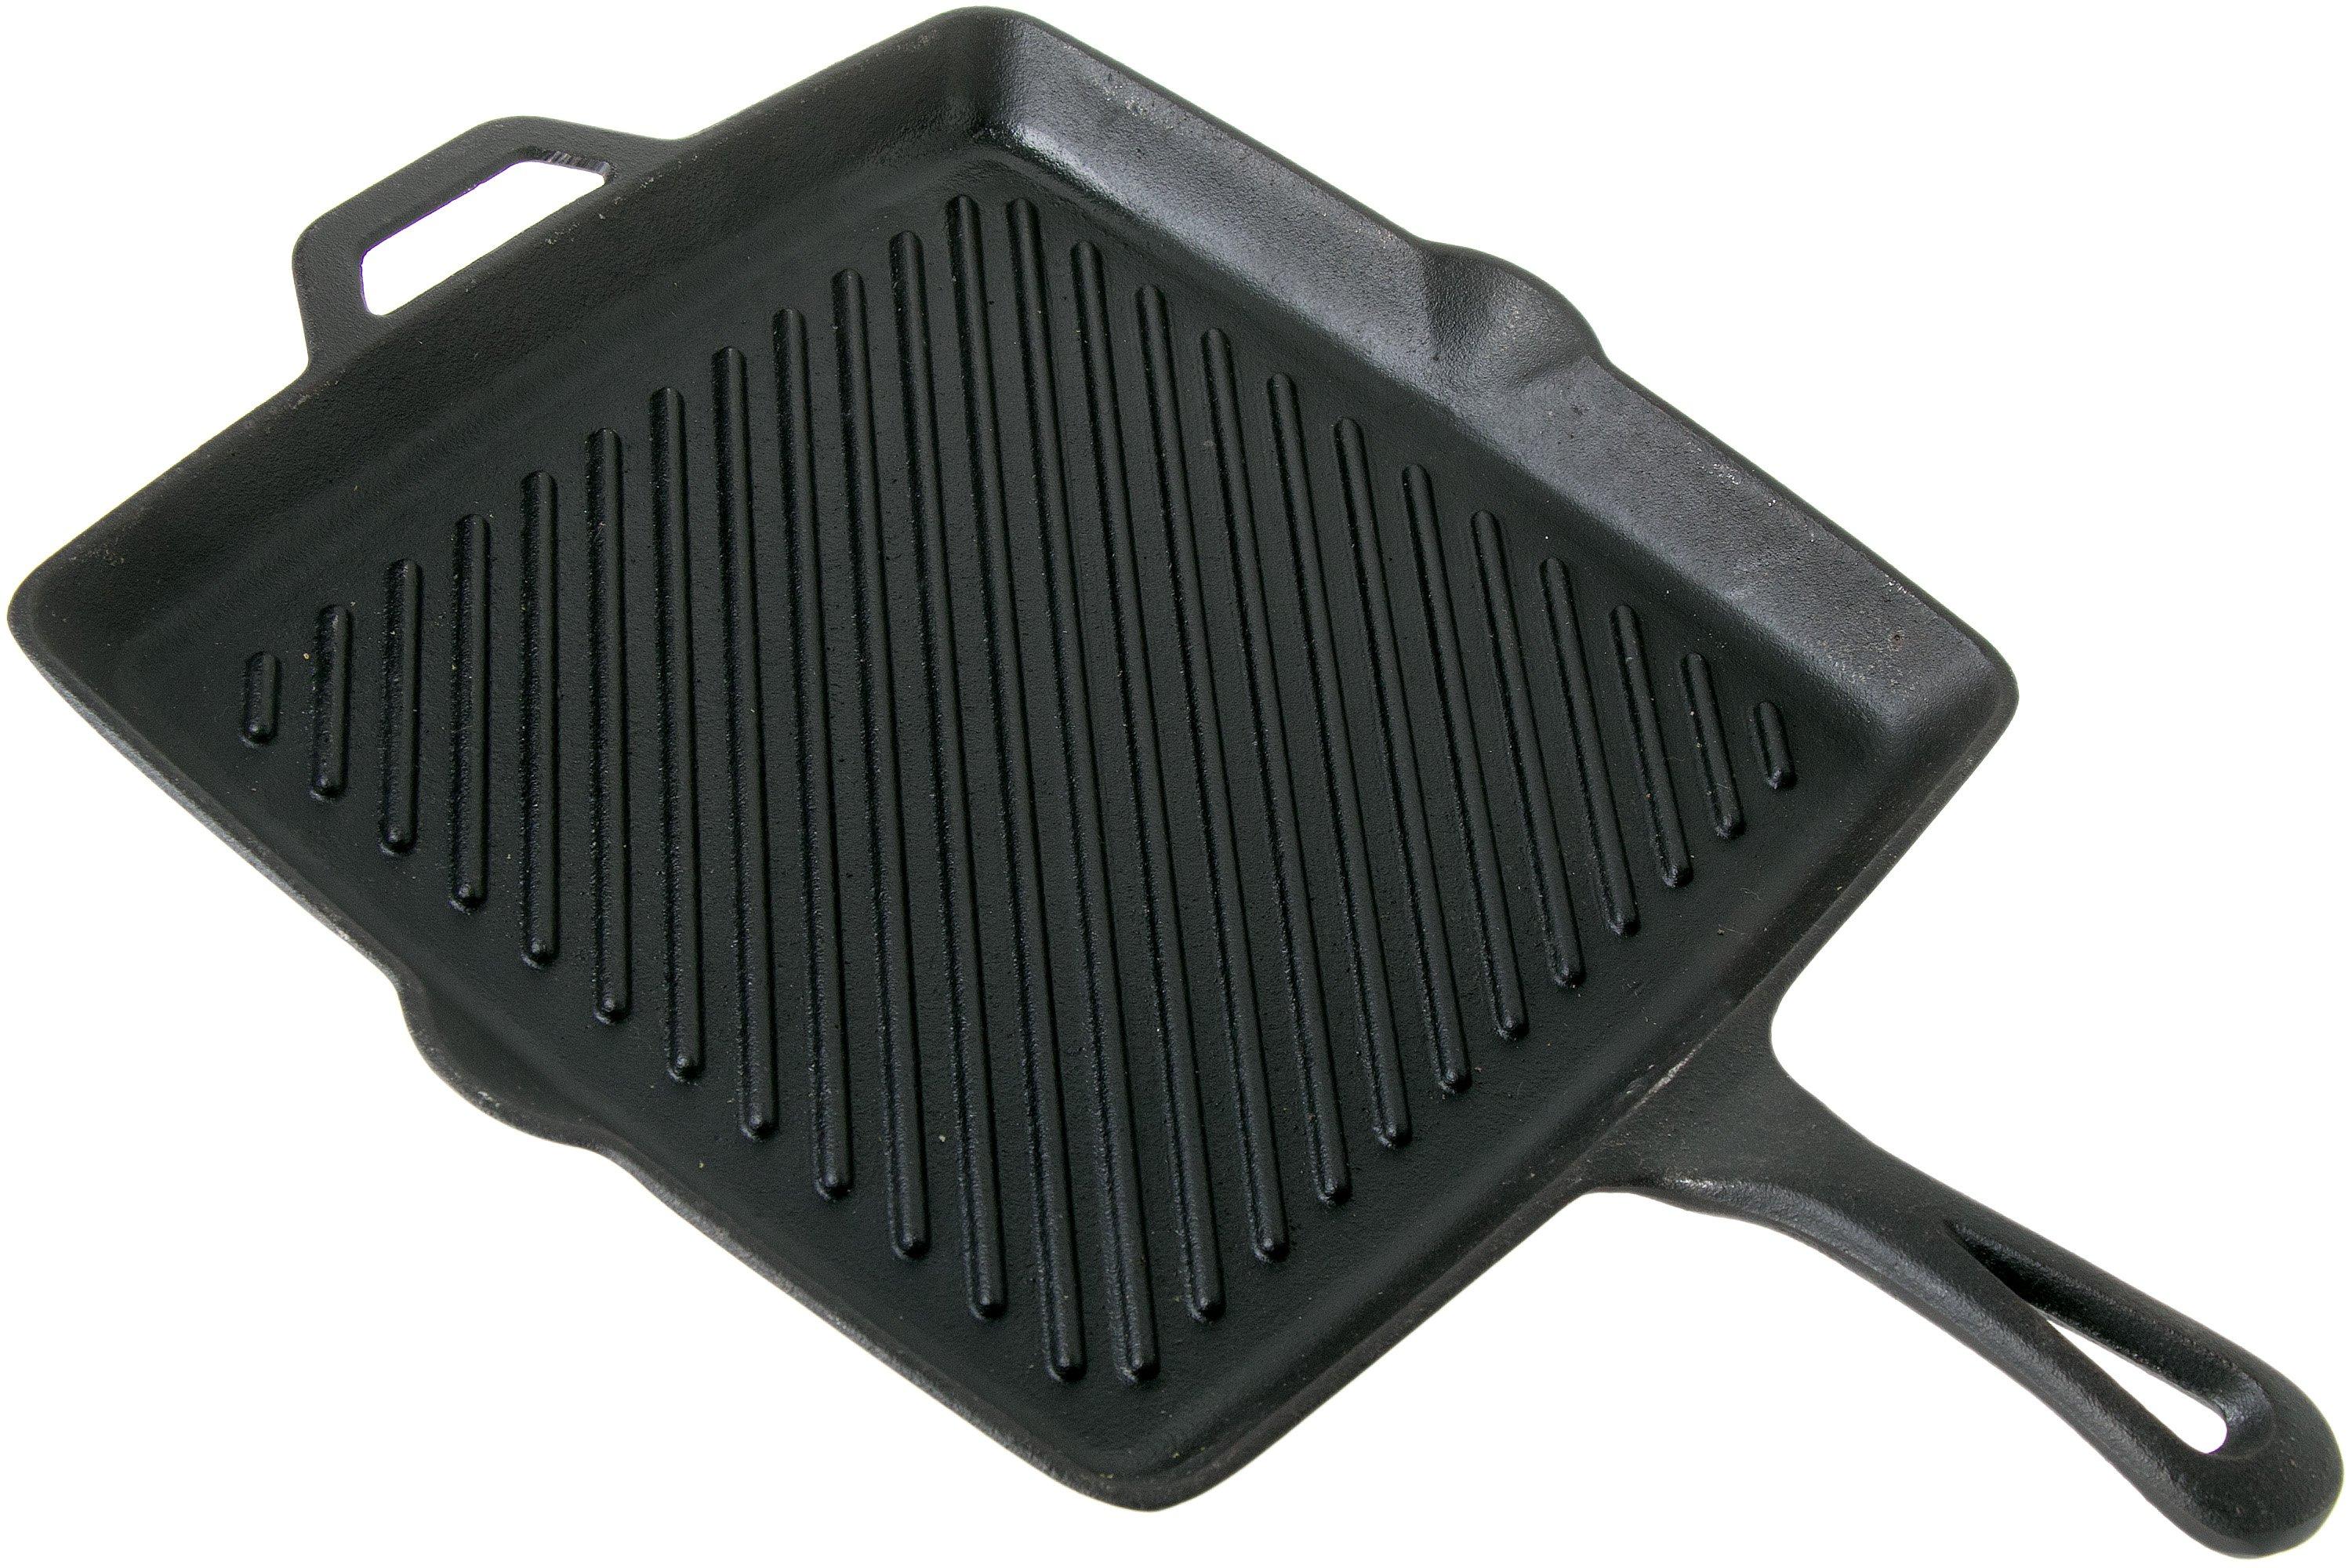 Camp Chef SK8, 8” Skillet, frying pan 20 cm